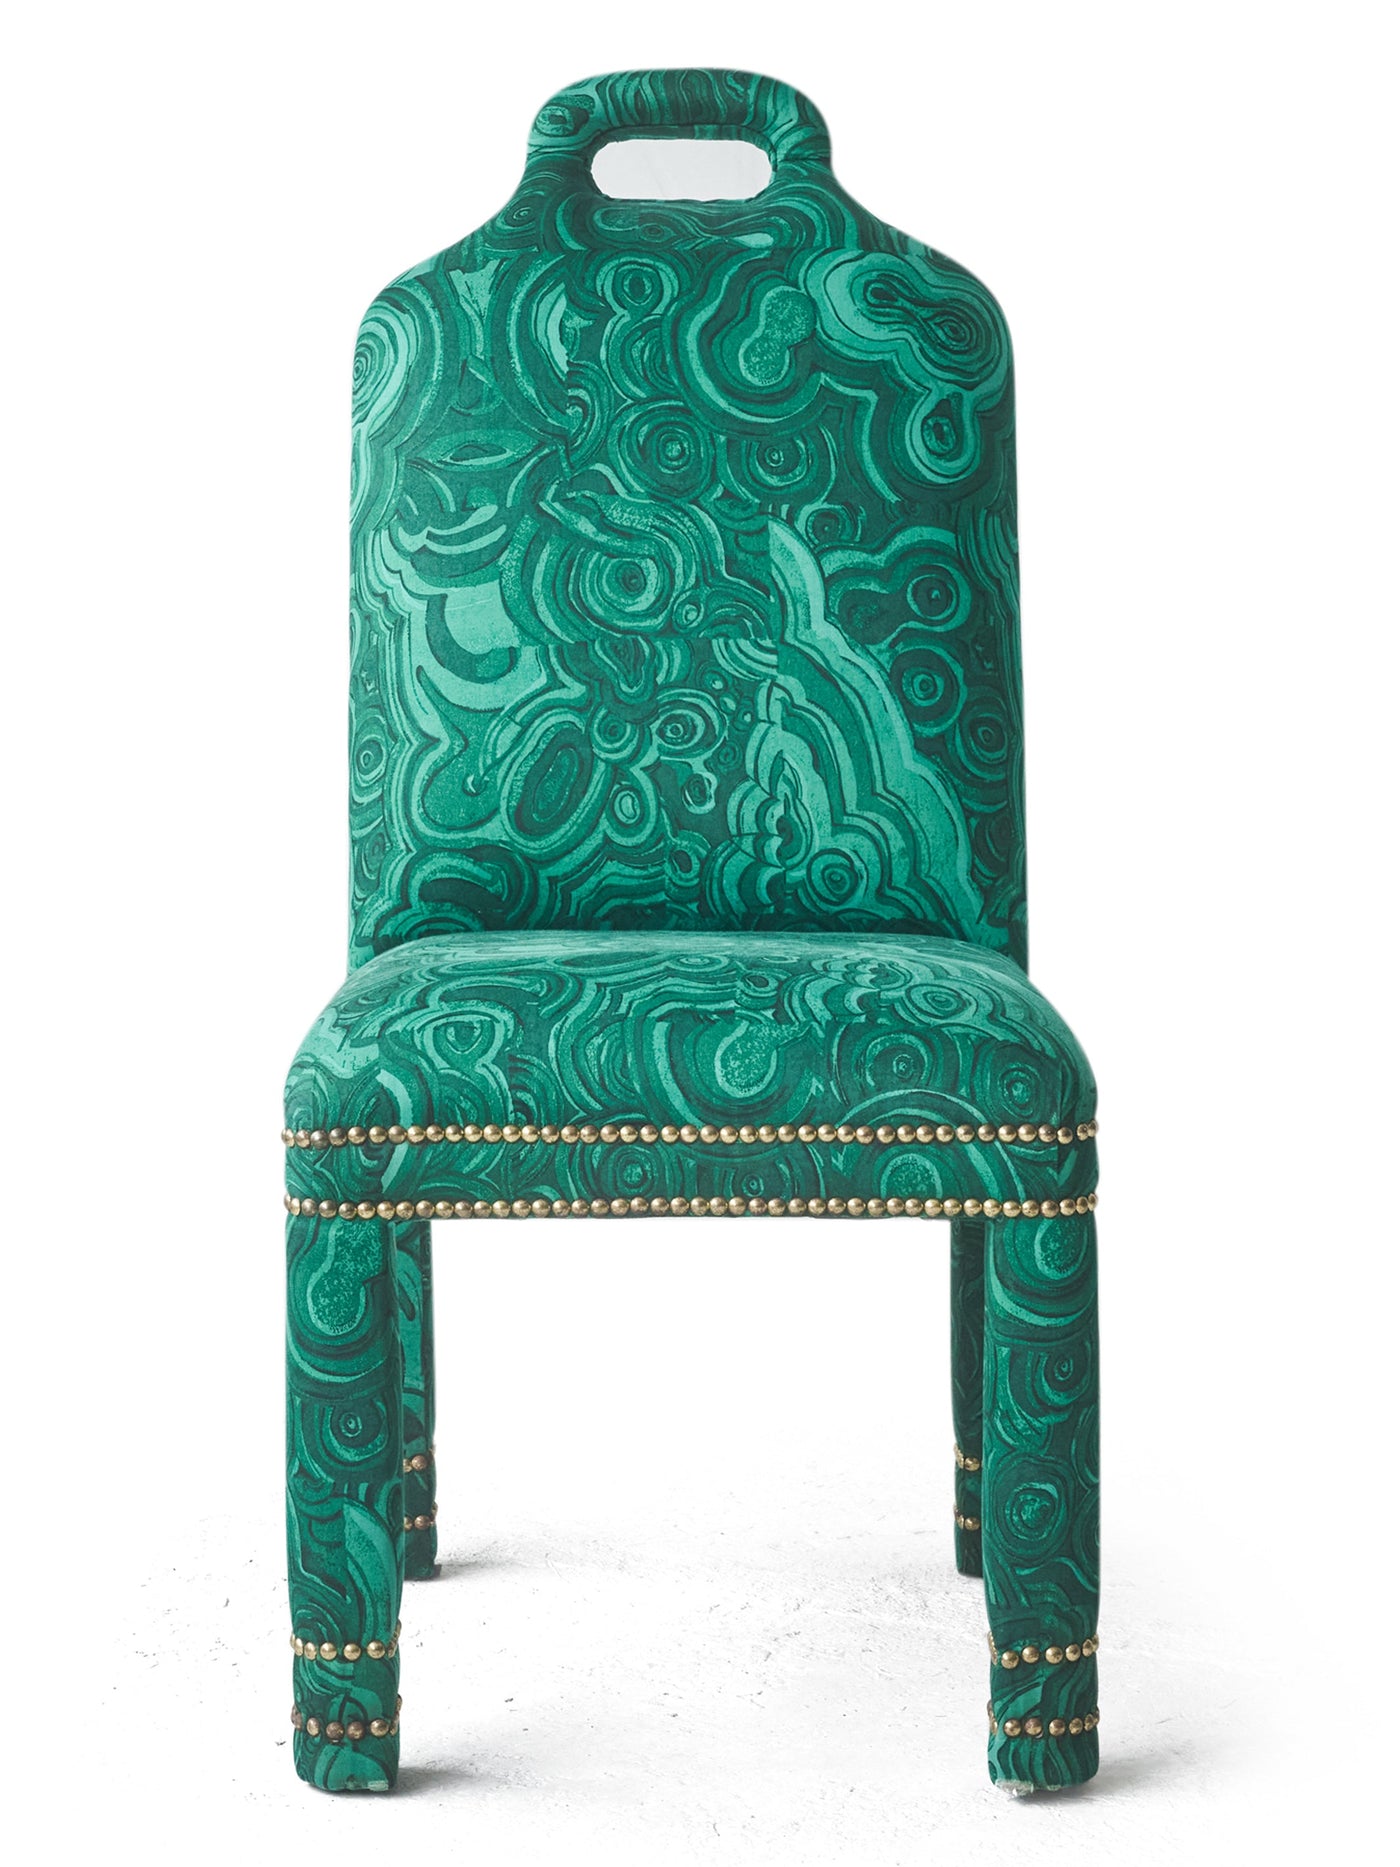 Six Malachite Dining Chairs Set One Michelle Nussbaumer Design Tony Duquette Jim Thompson Fabric